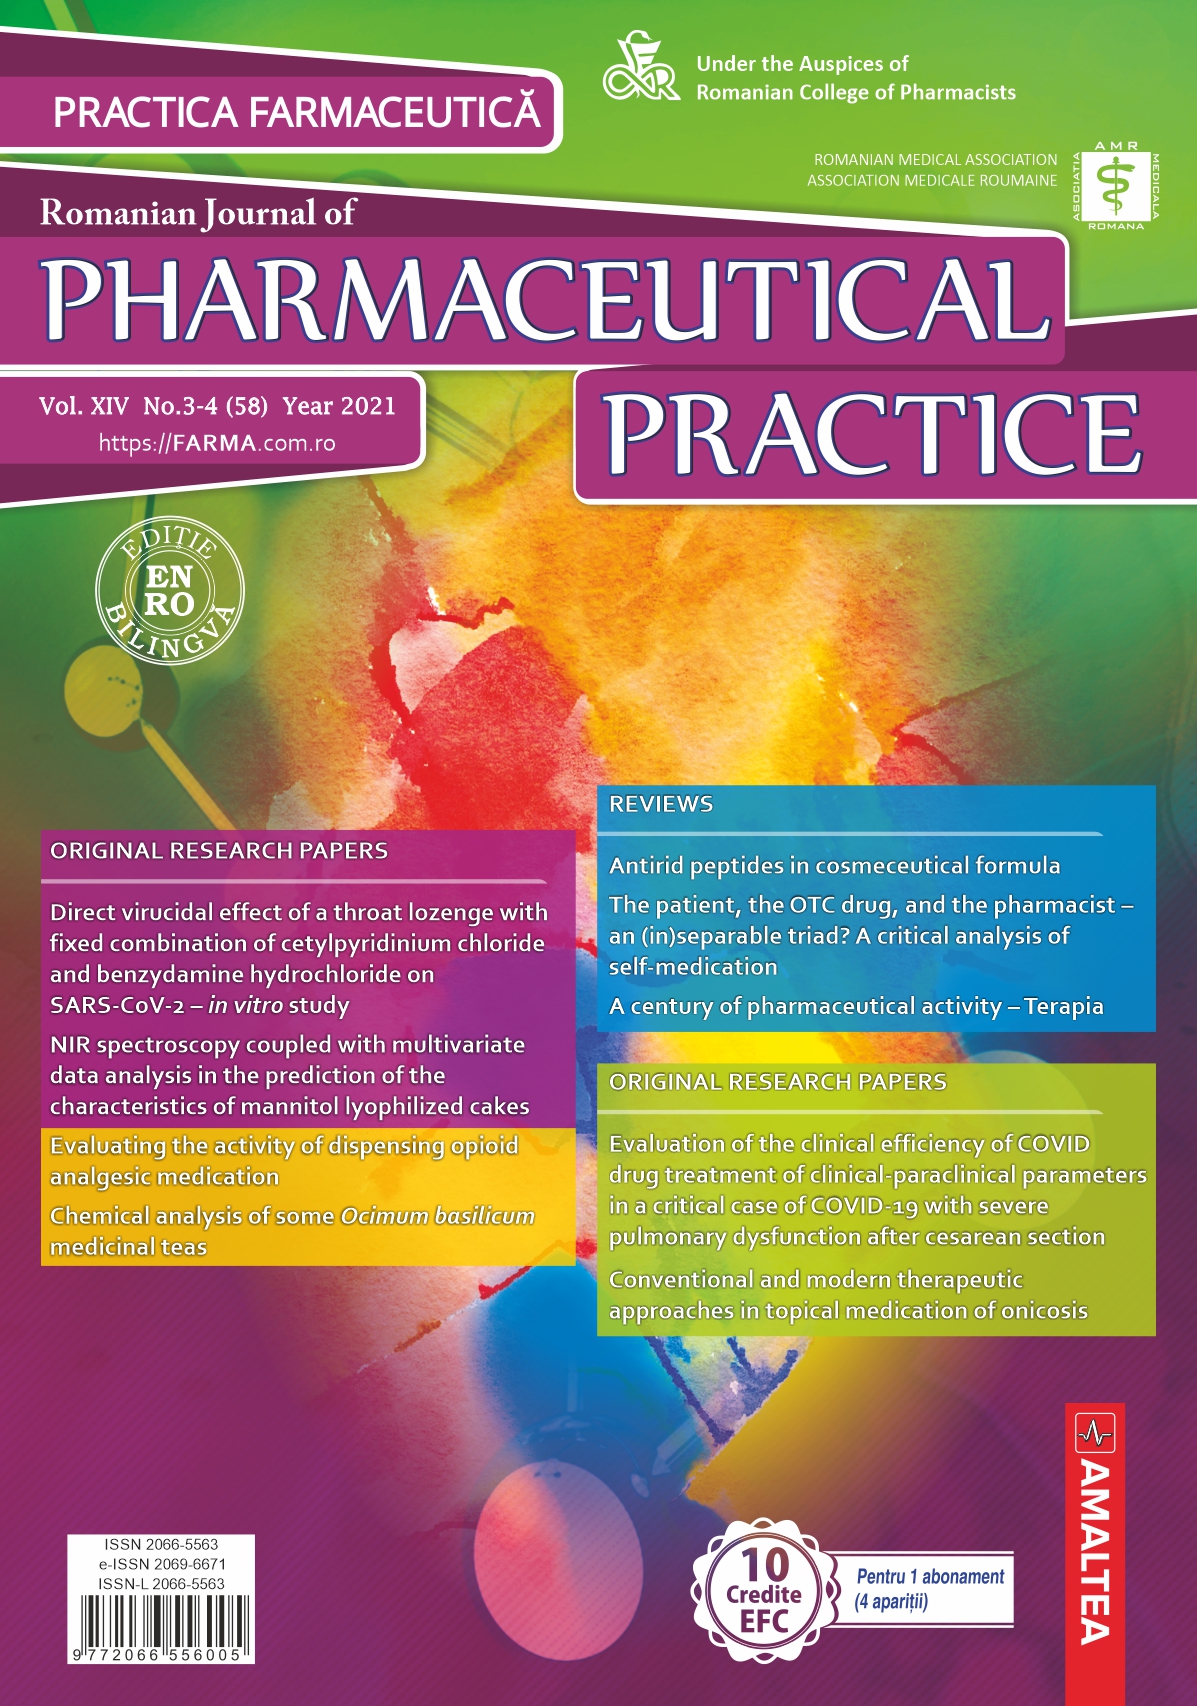 Romanian Journal of Pharmaceutical Practice - Practica Farmaceutica, Vol. XIV, No. 3-4 (58), 2021